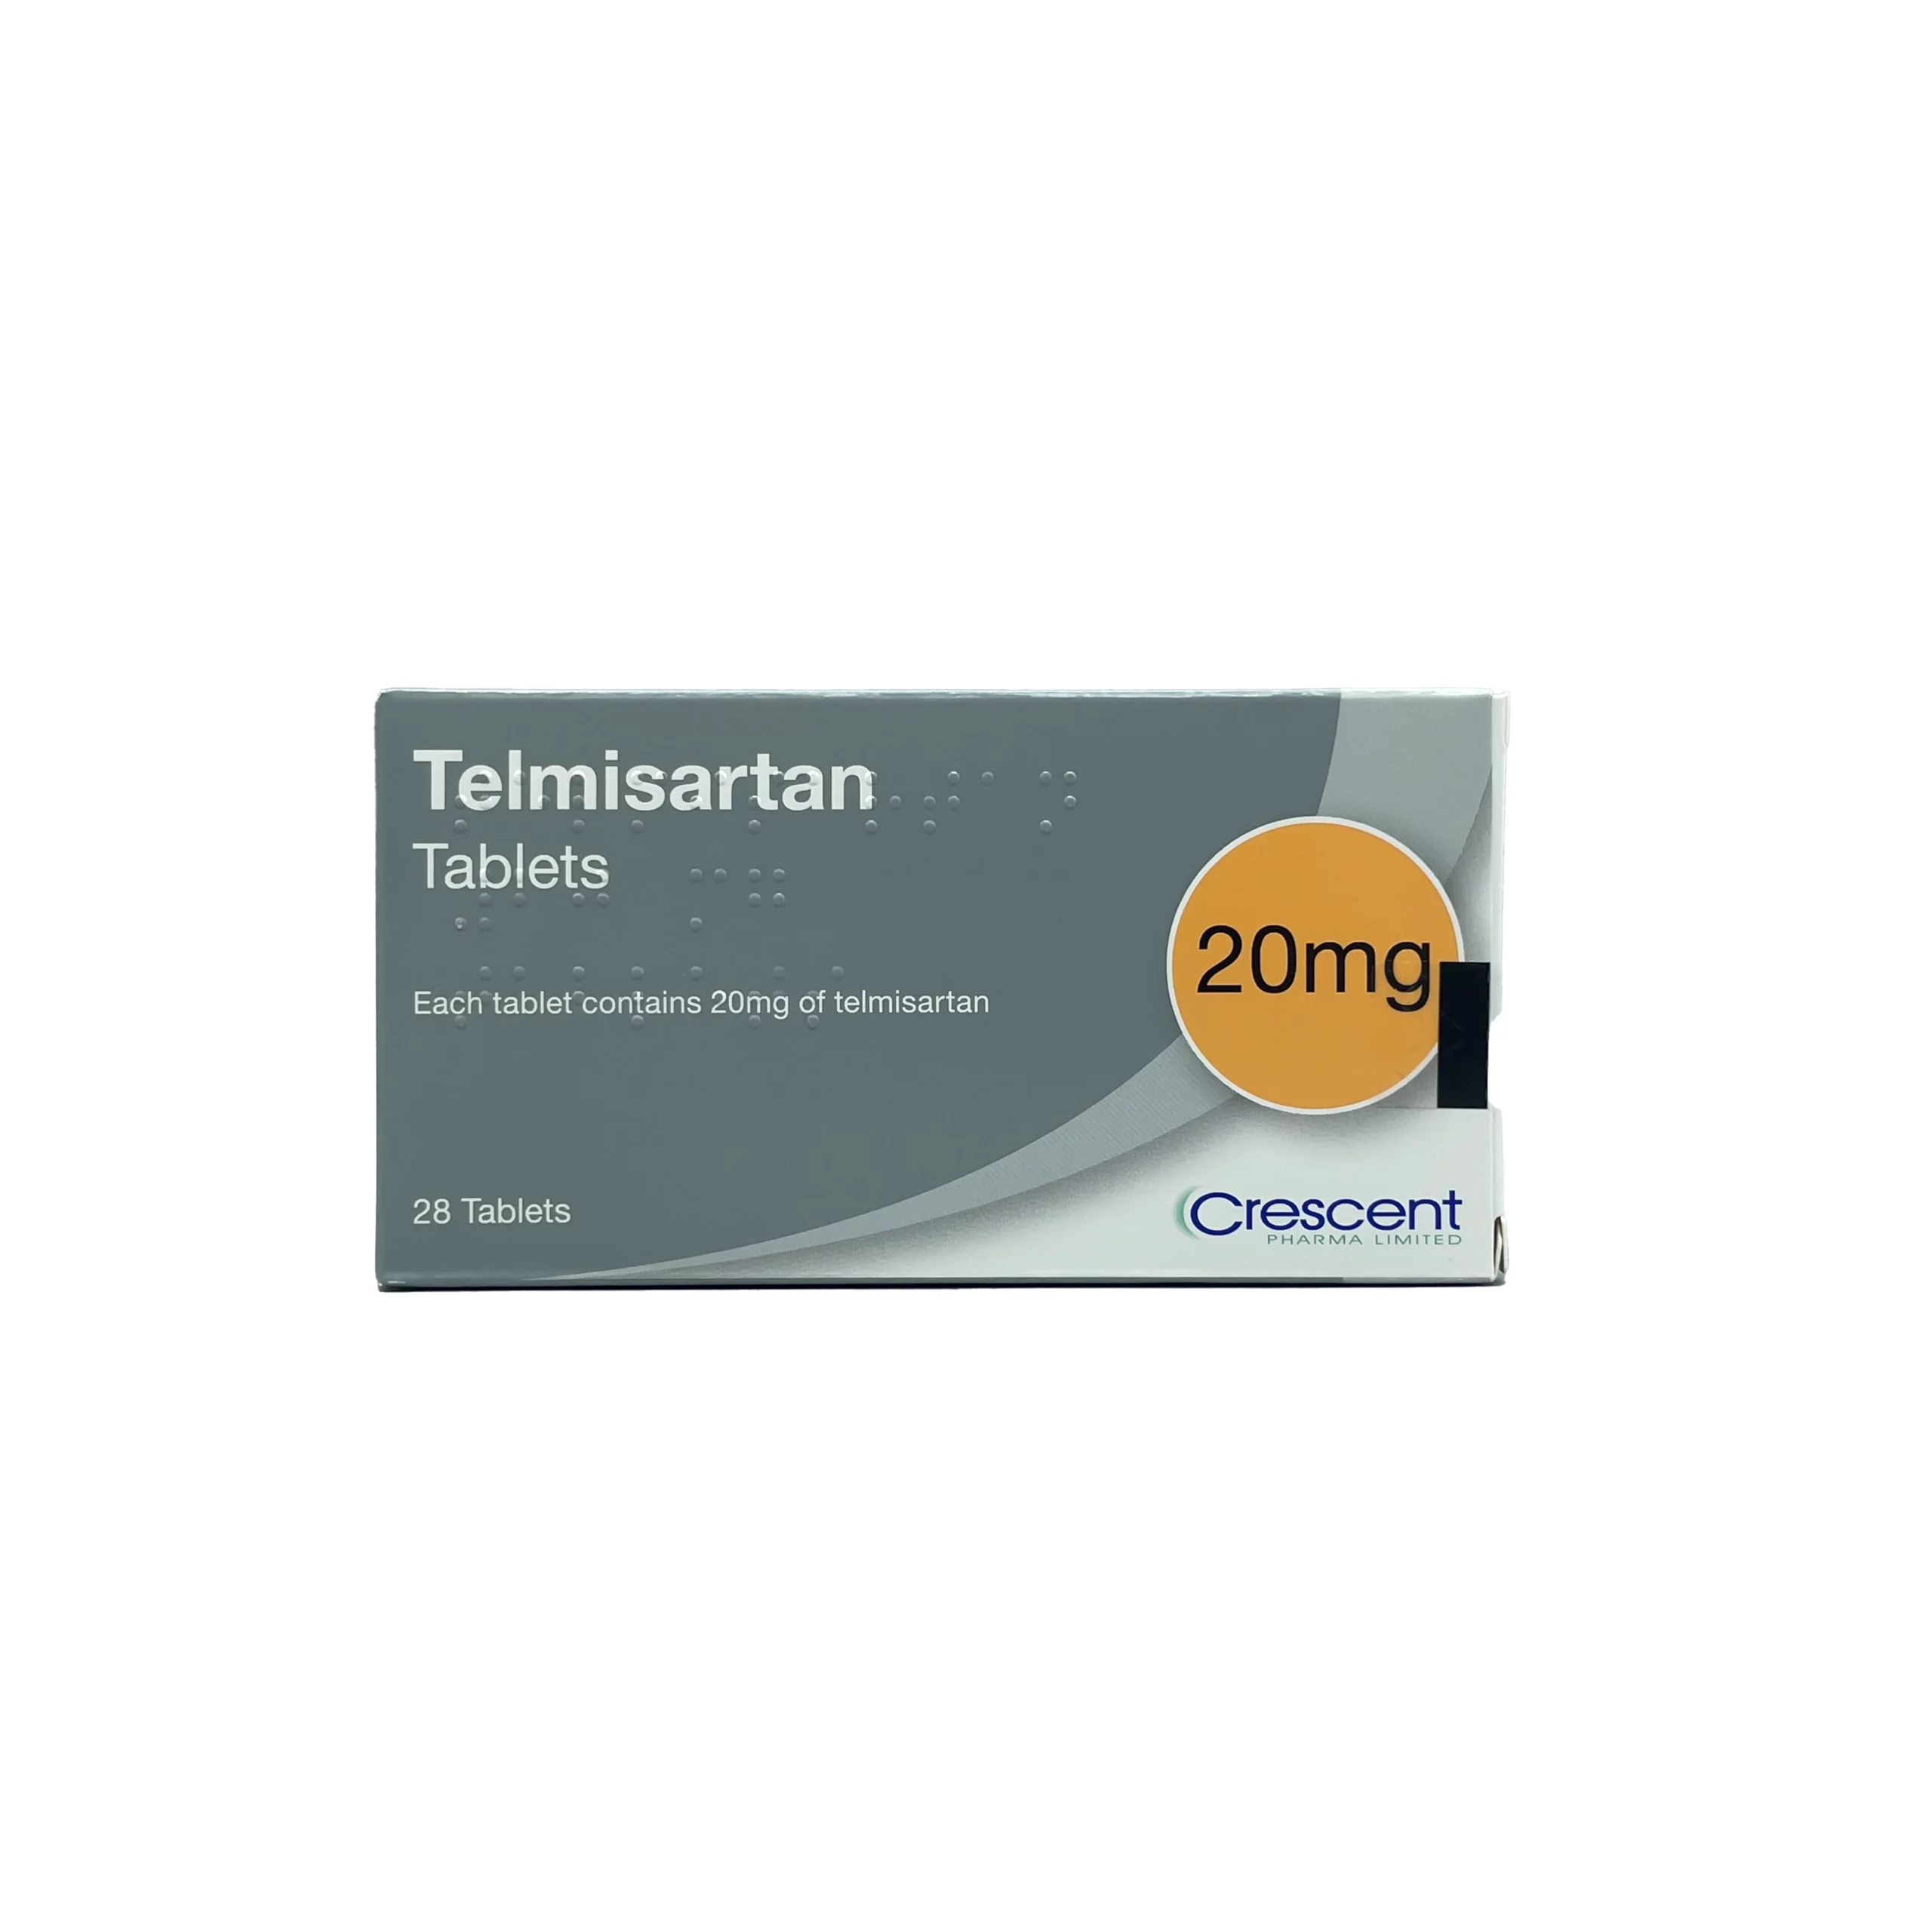 Telmisartan 20mg Tablets